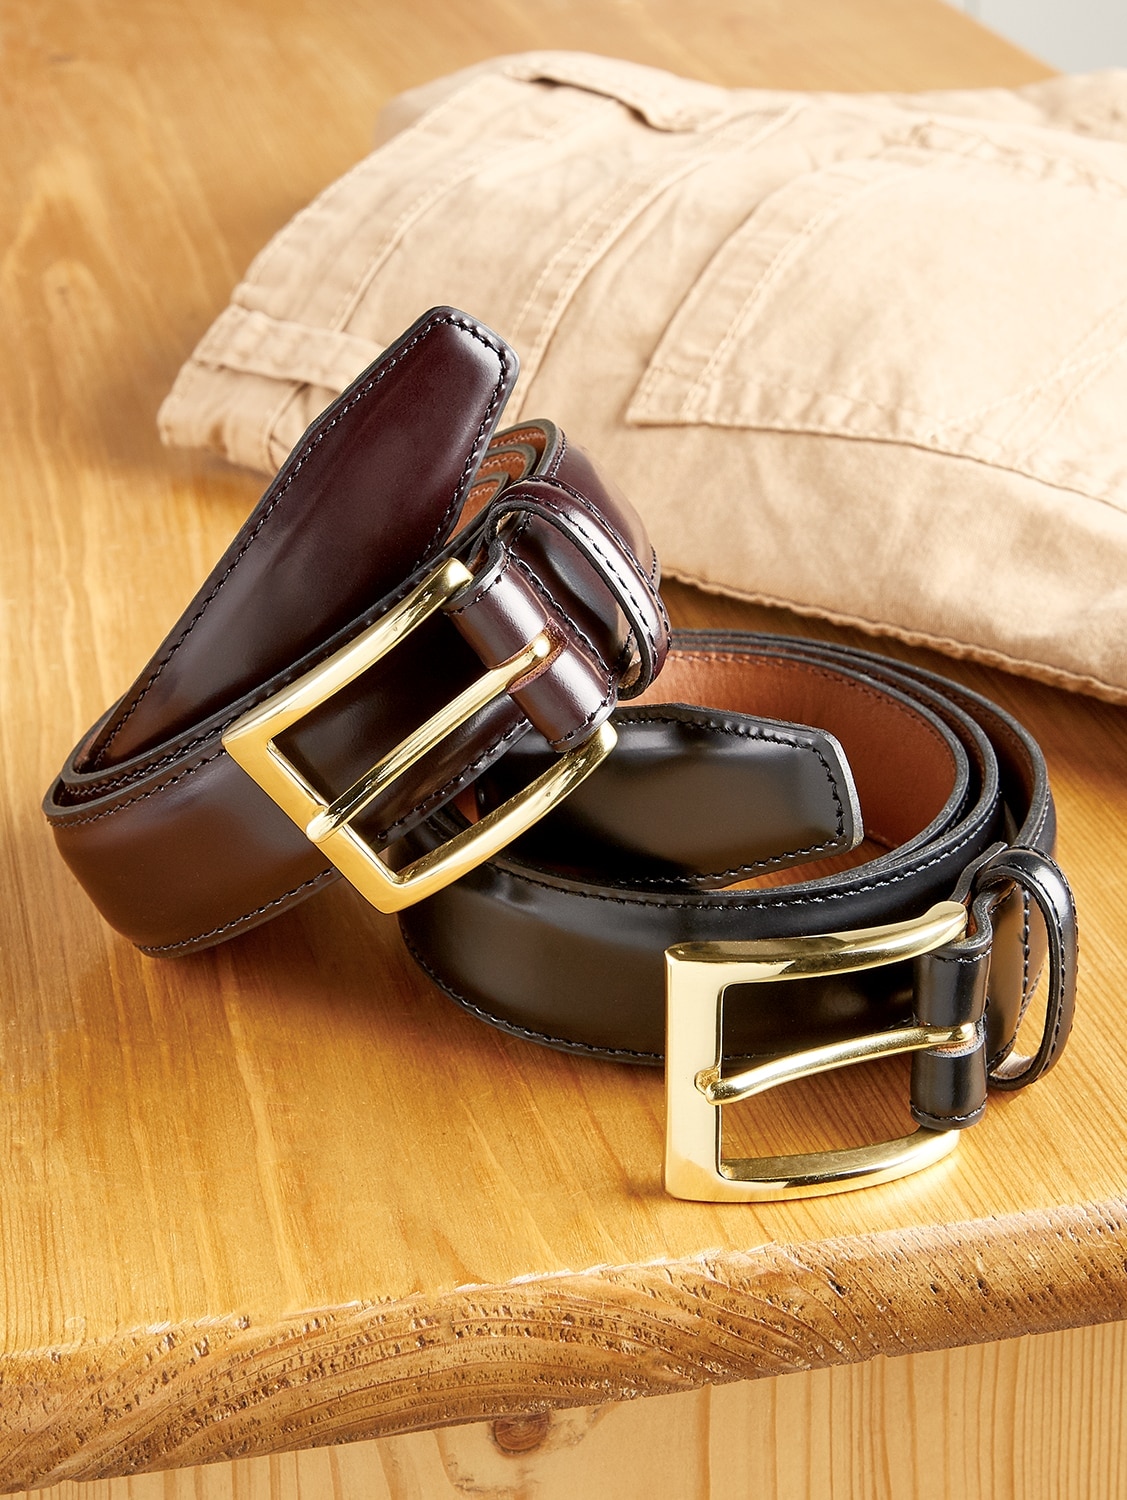 DENGDAI Belt Mens Belt Leather Belt Length 100-135cm